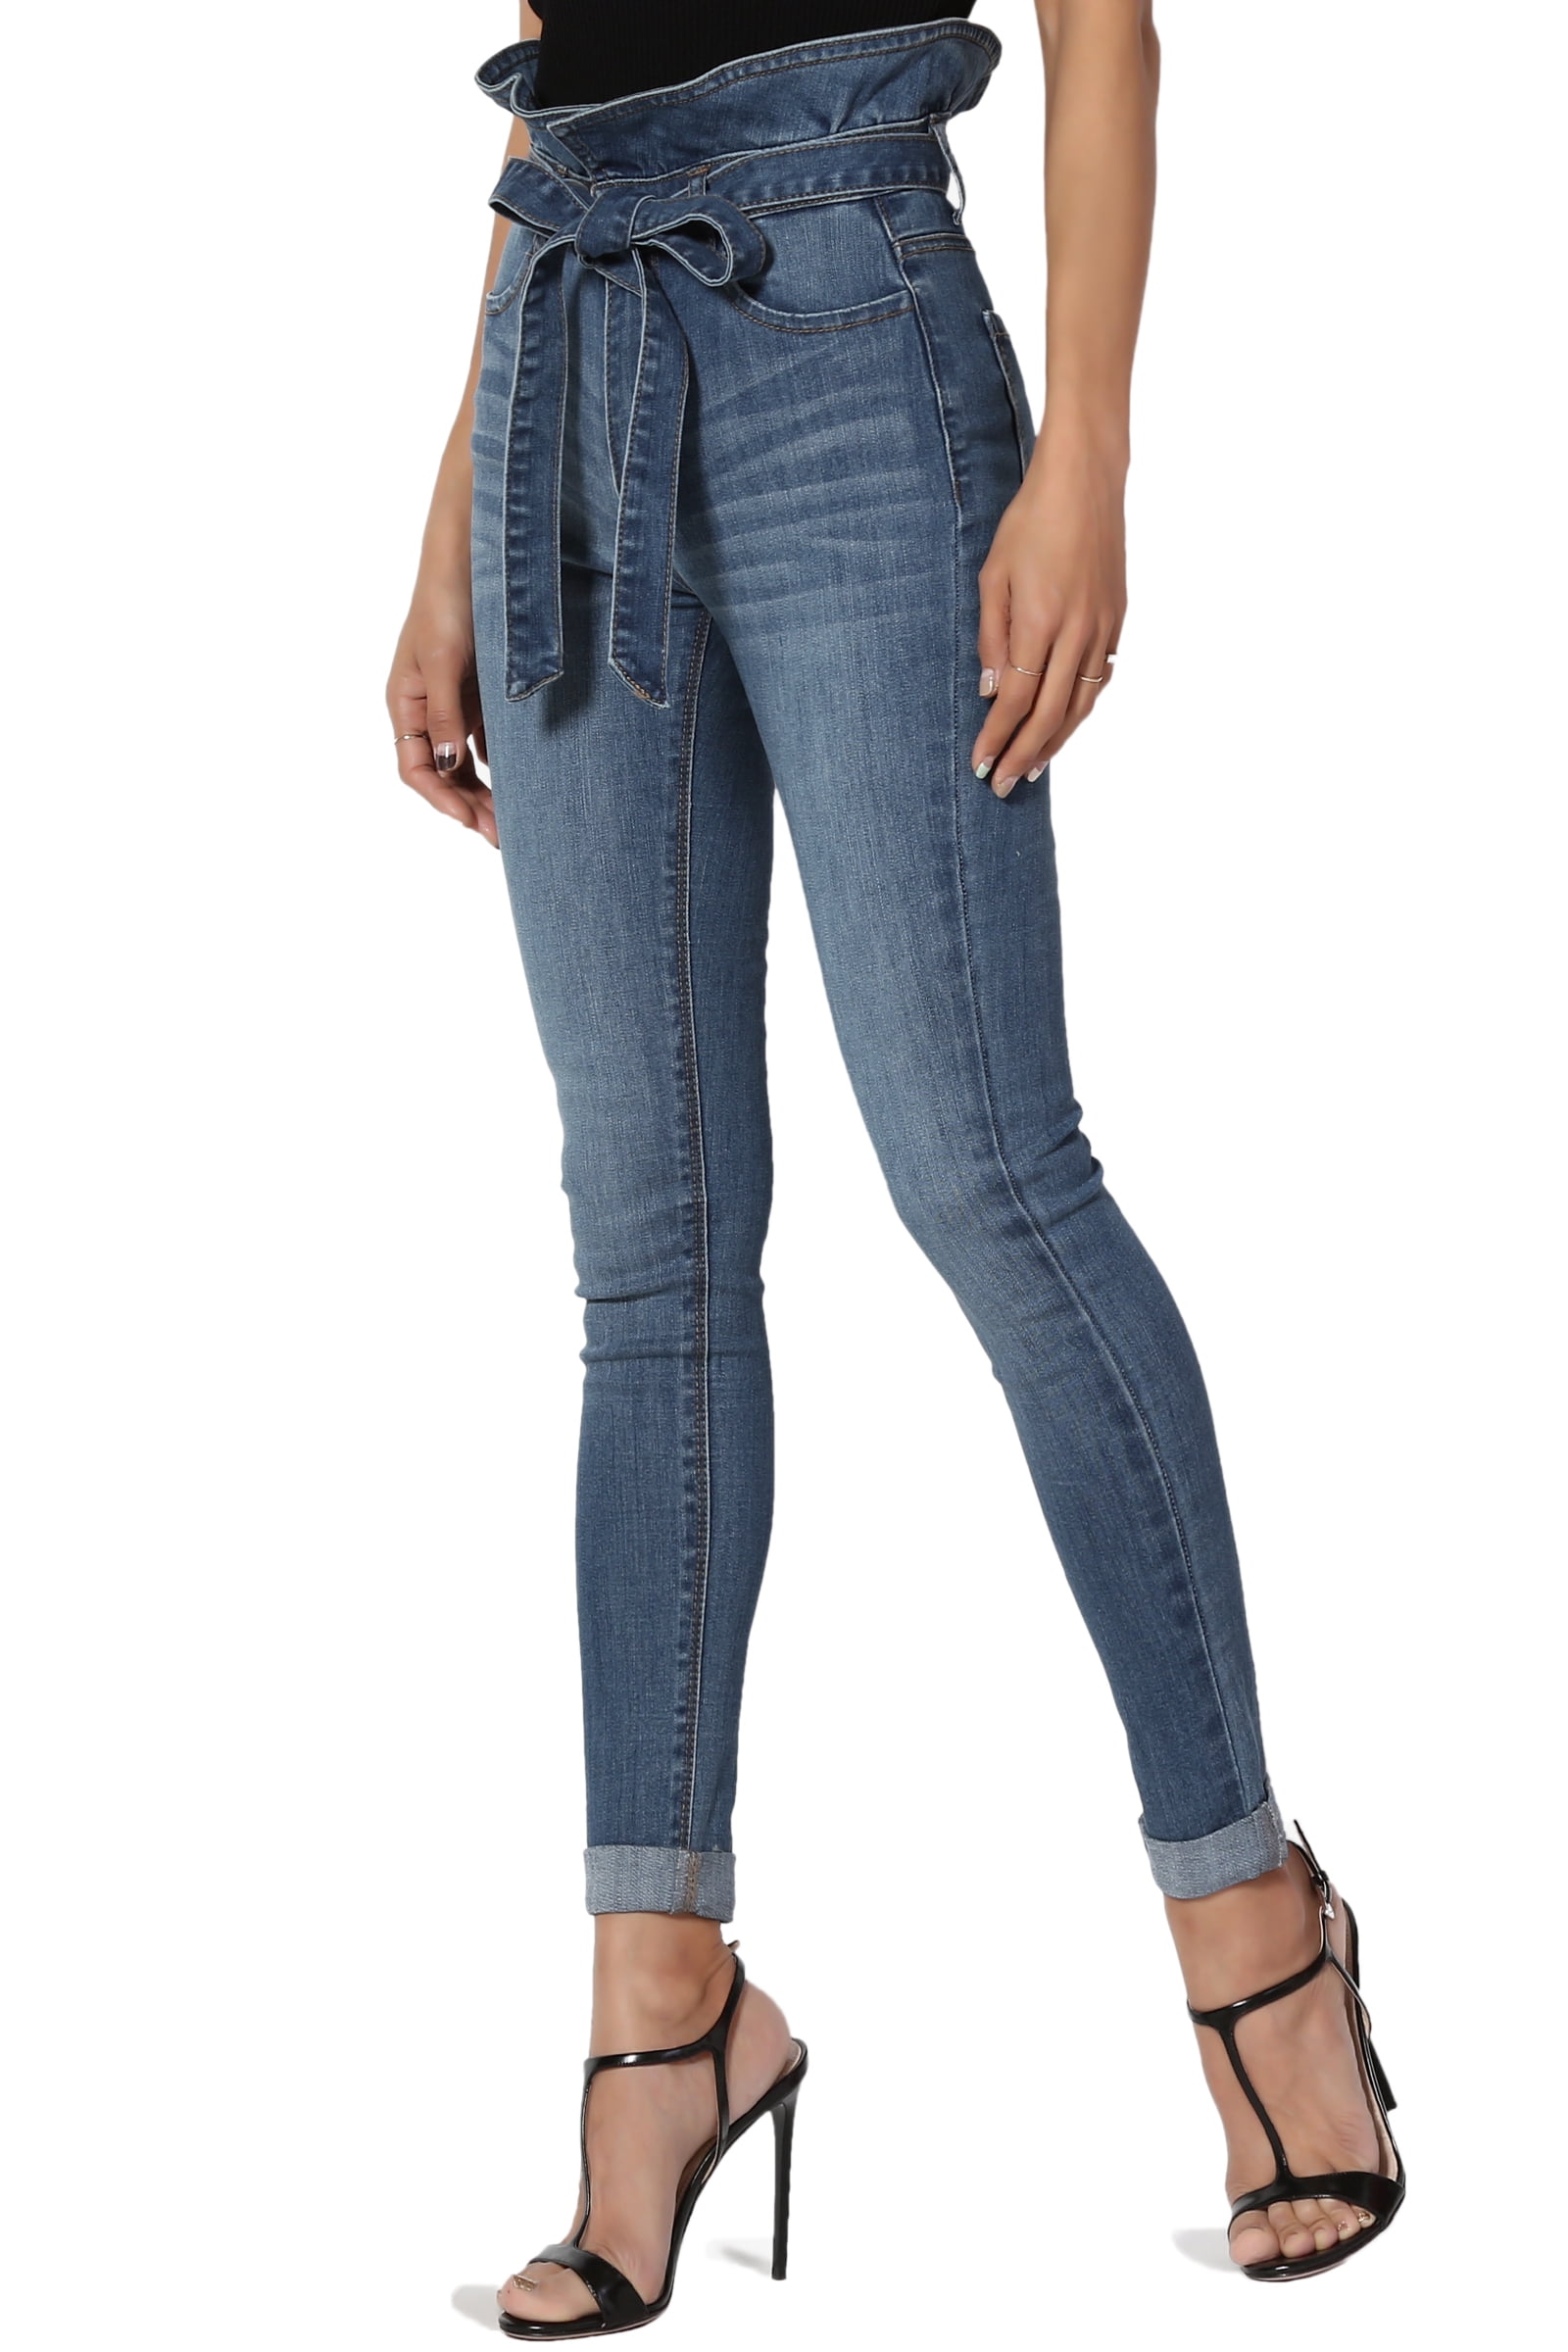 TheMogan Women's High Rise Tie Flattering Versatile Jeans - Walmart.com